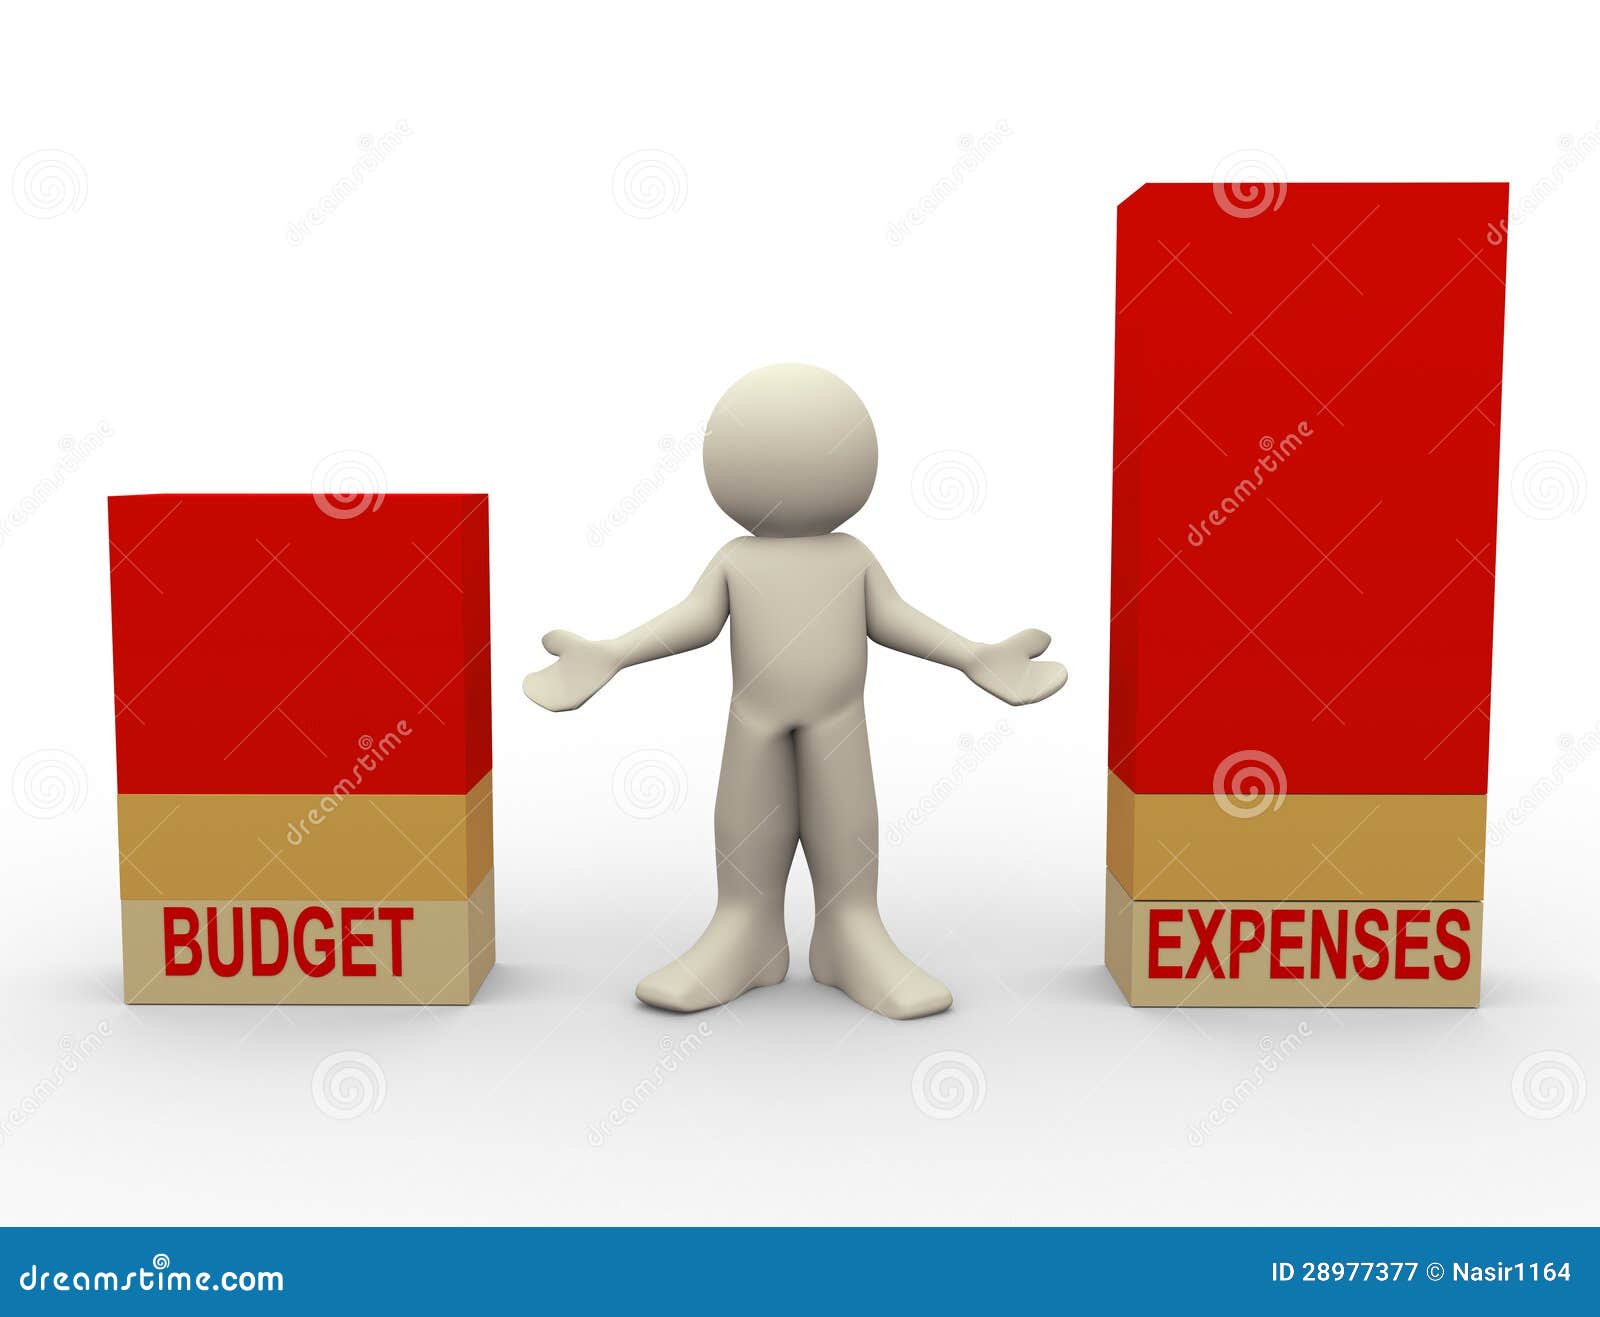 clipart budget illustrations - photo #20